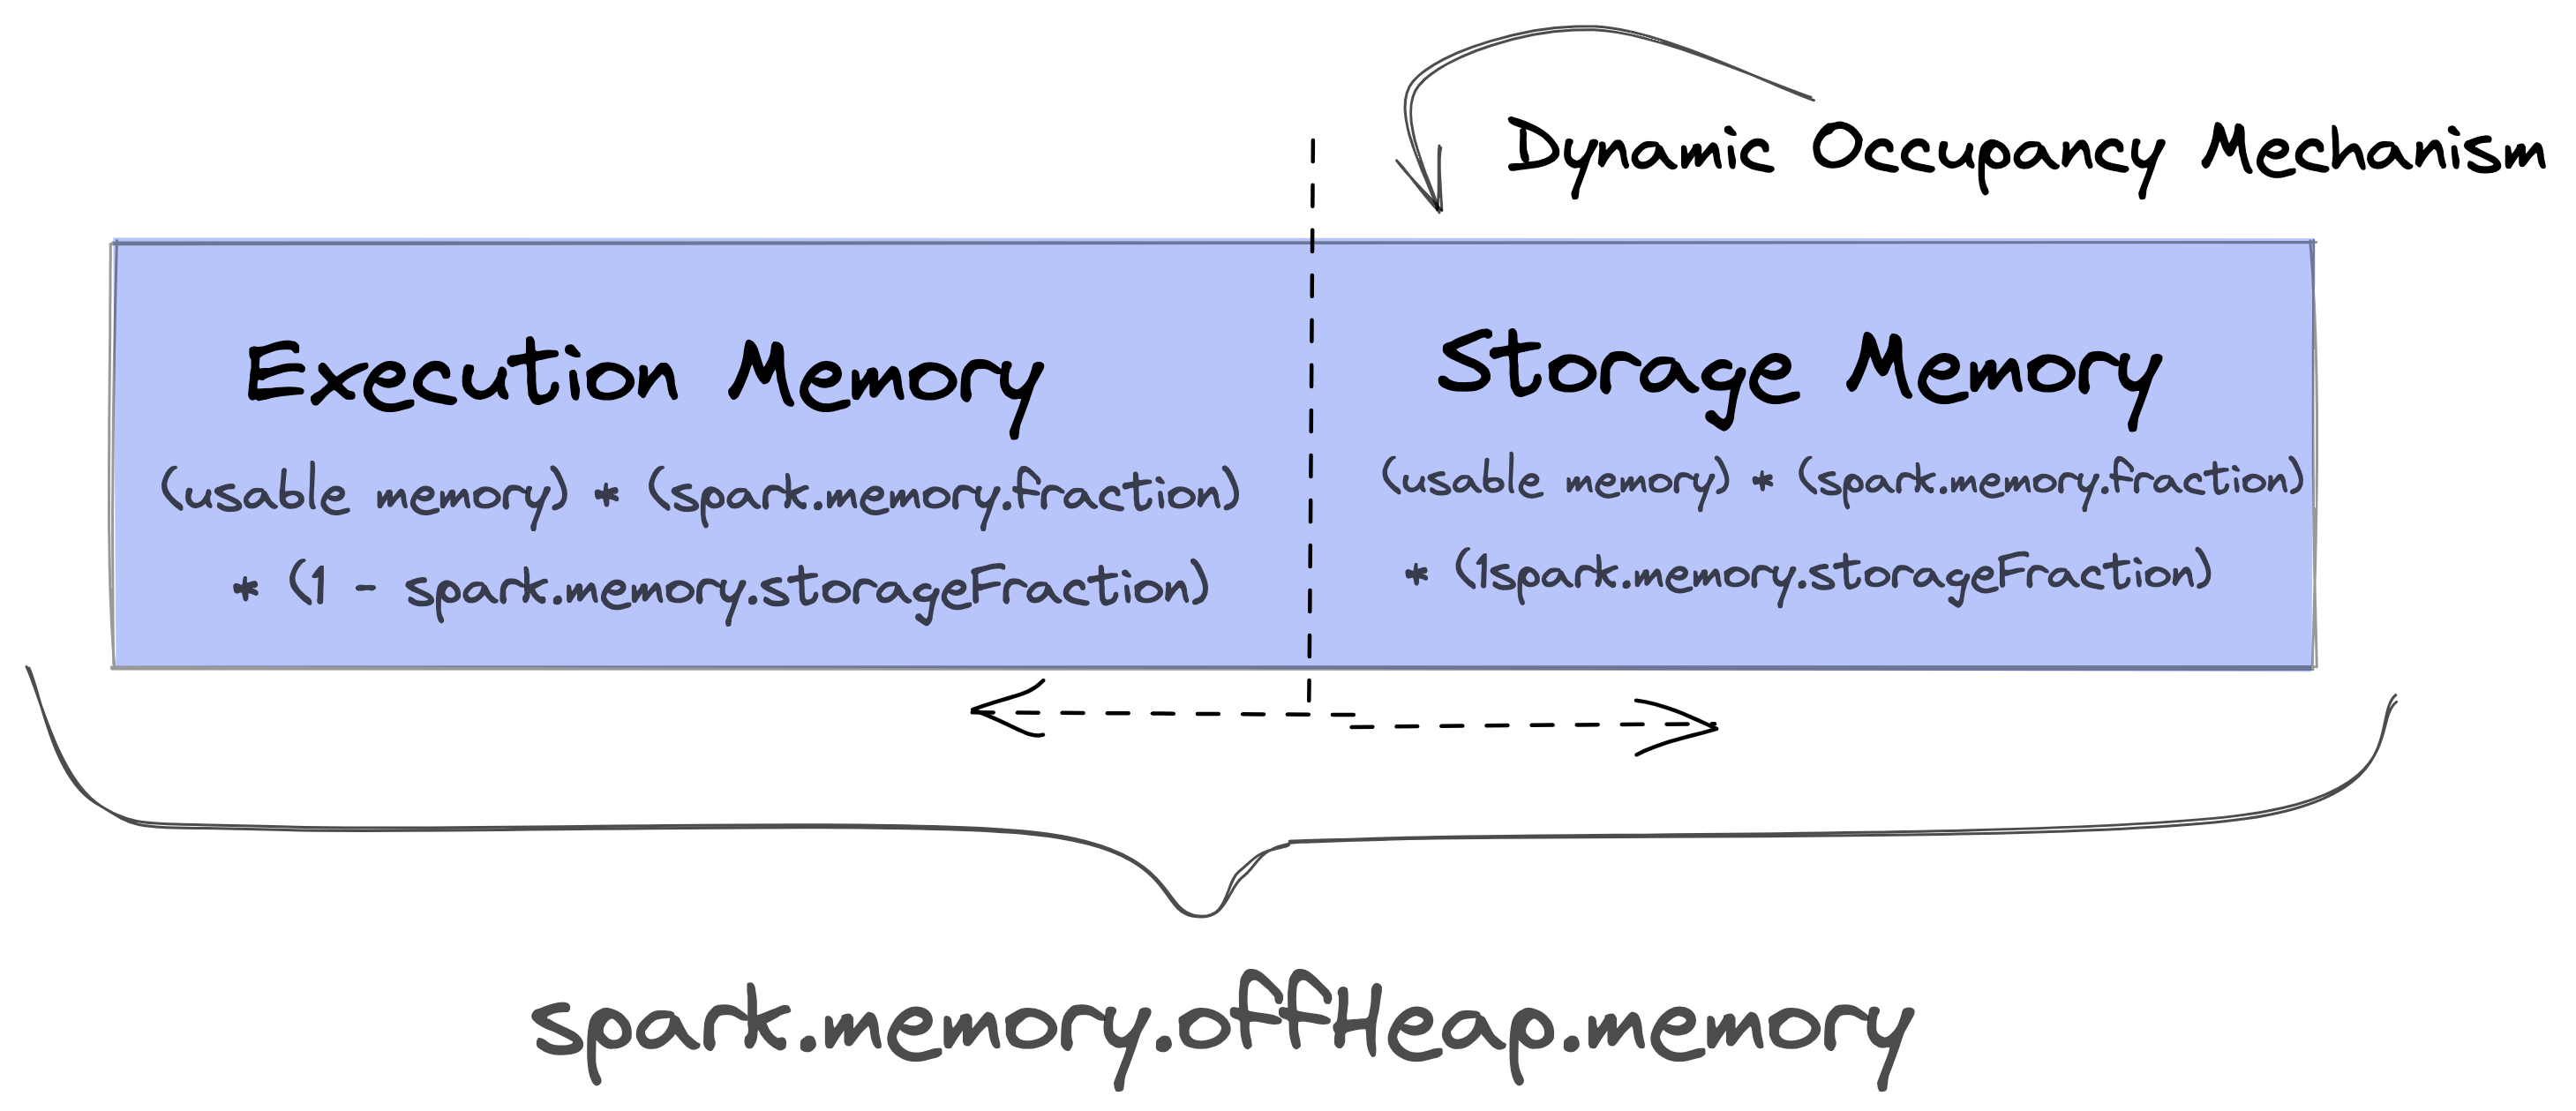 Dynamic Occupancy Mechanism Image